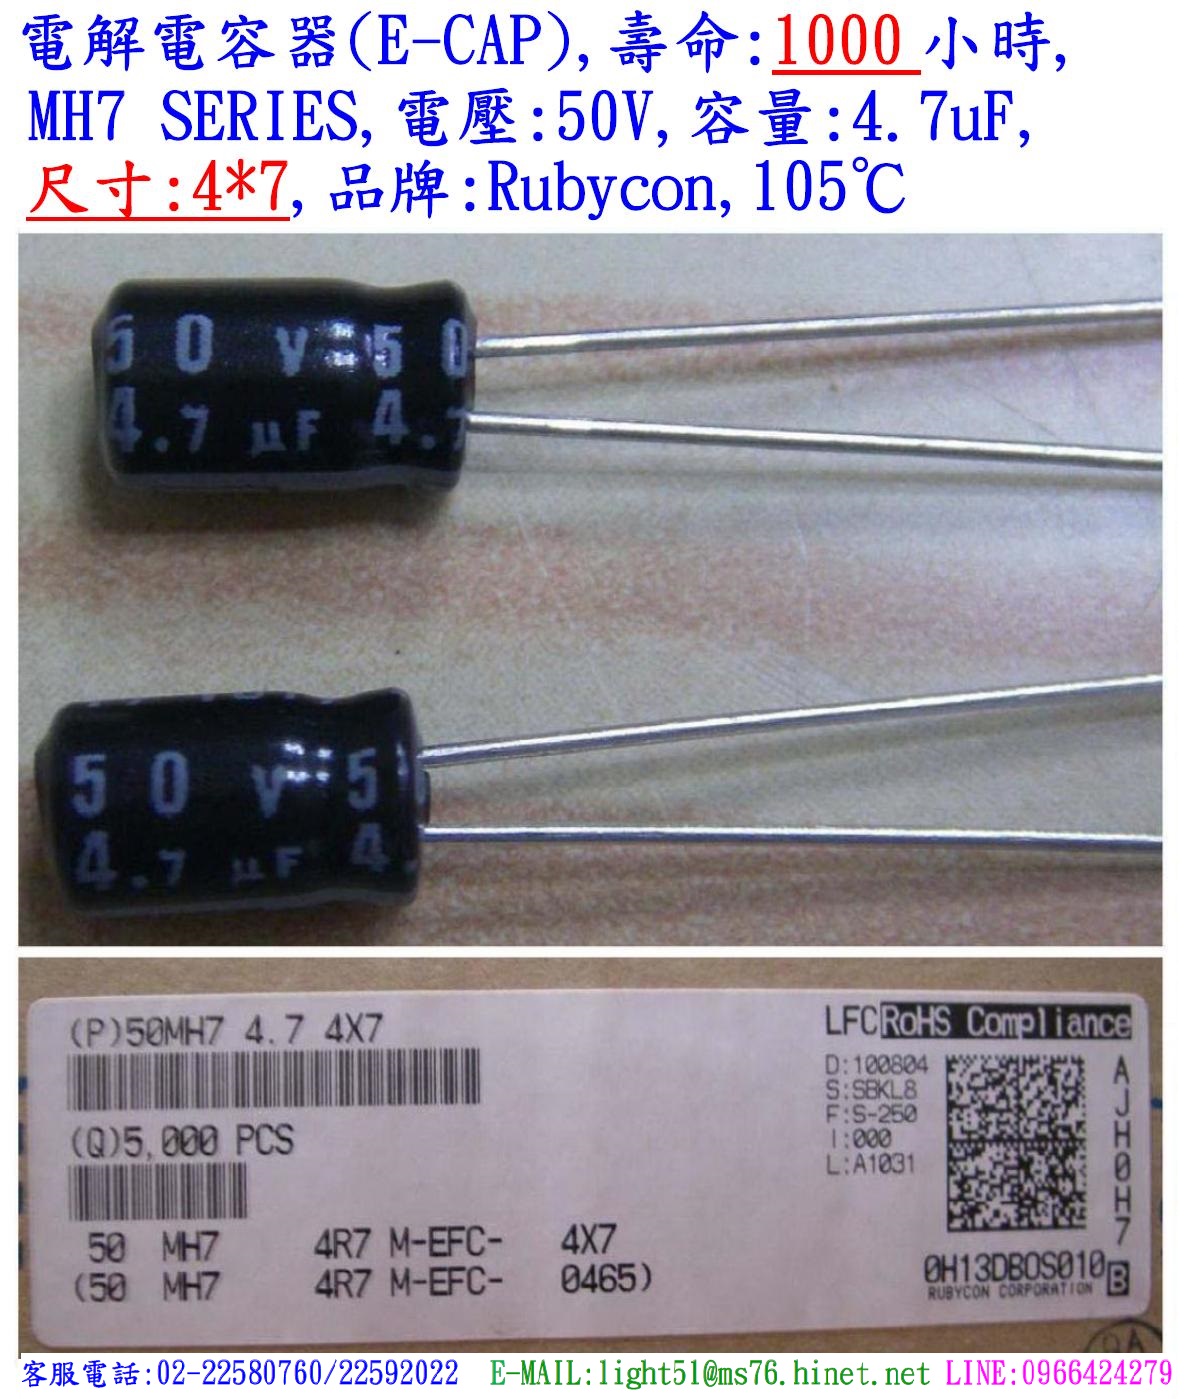 MH7,50V,4.7uF,SIZE:4*7,電解電容器,LIFE:1000小時,Rubycon(日本)